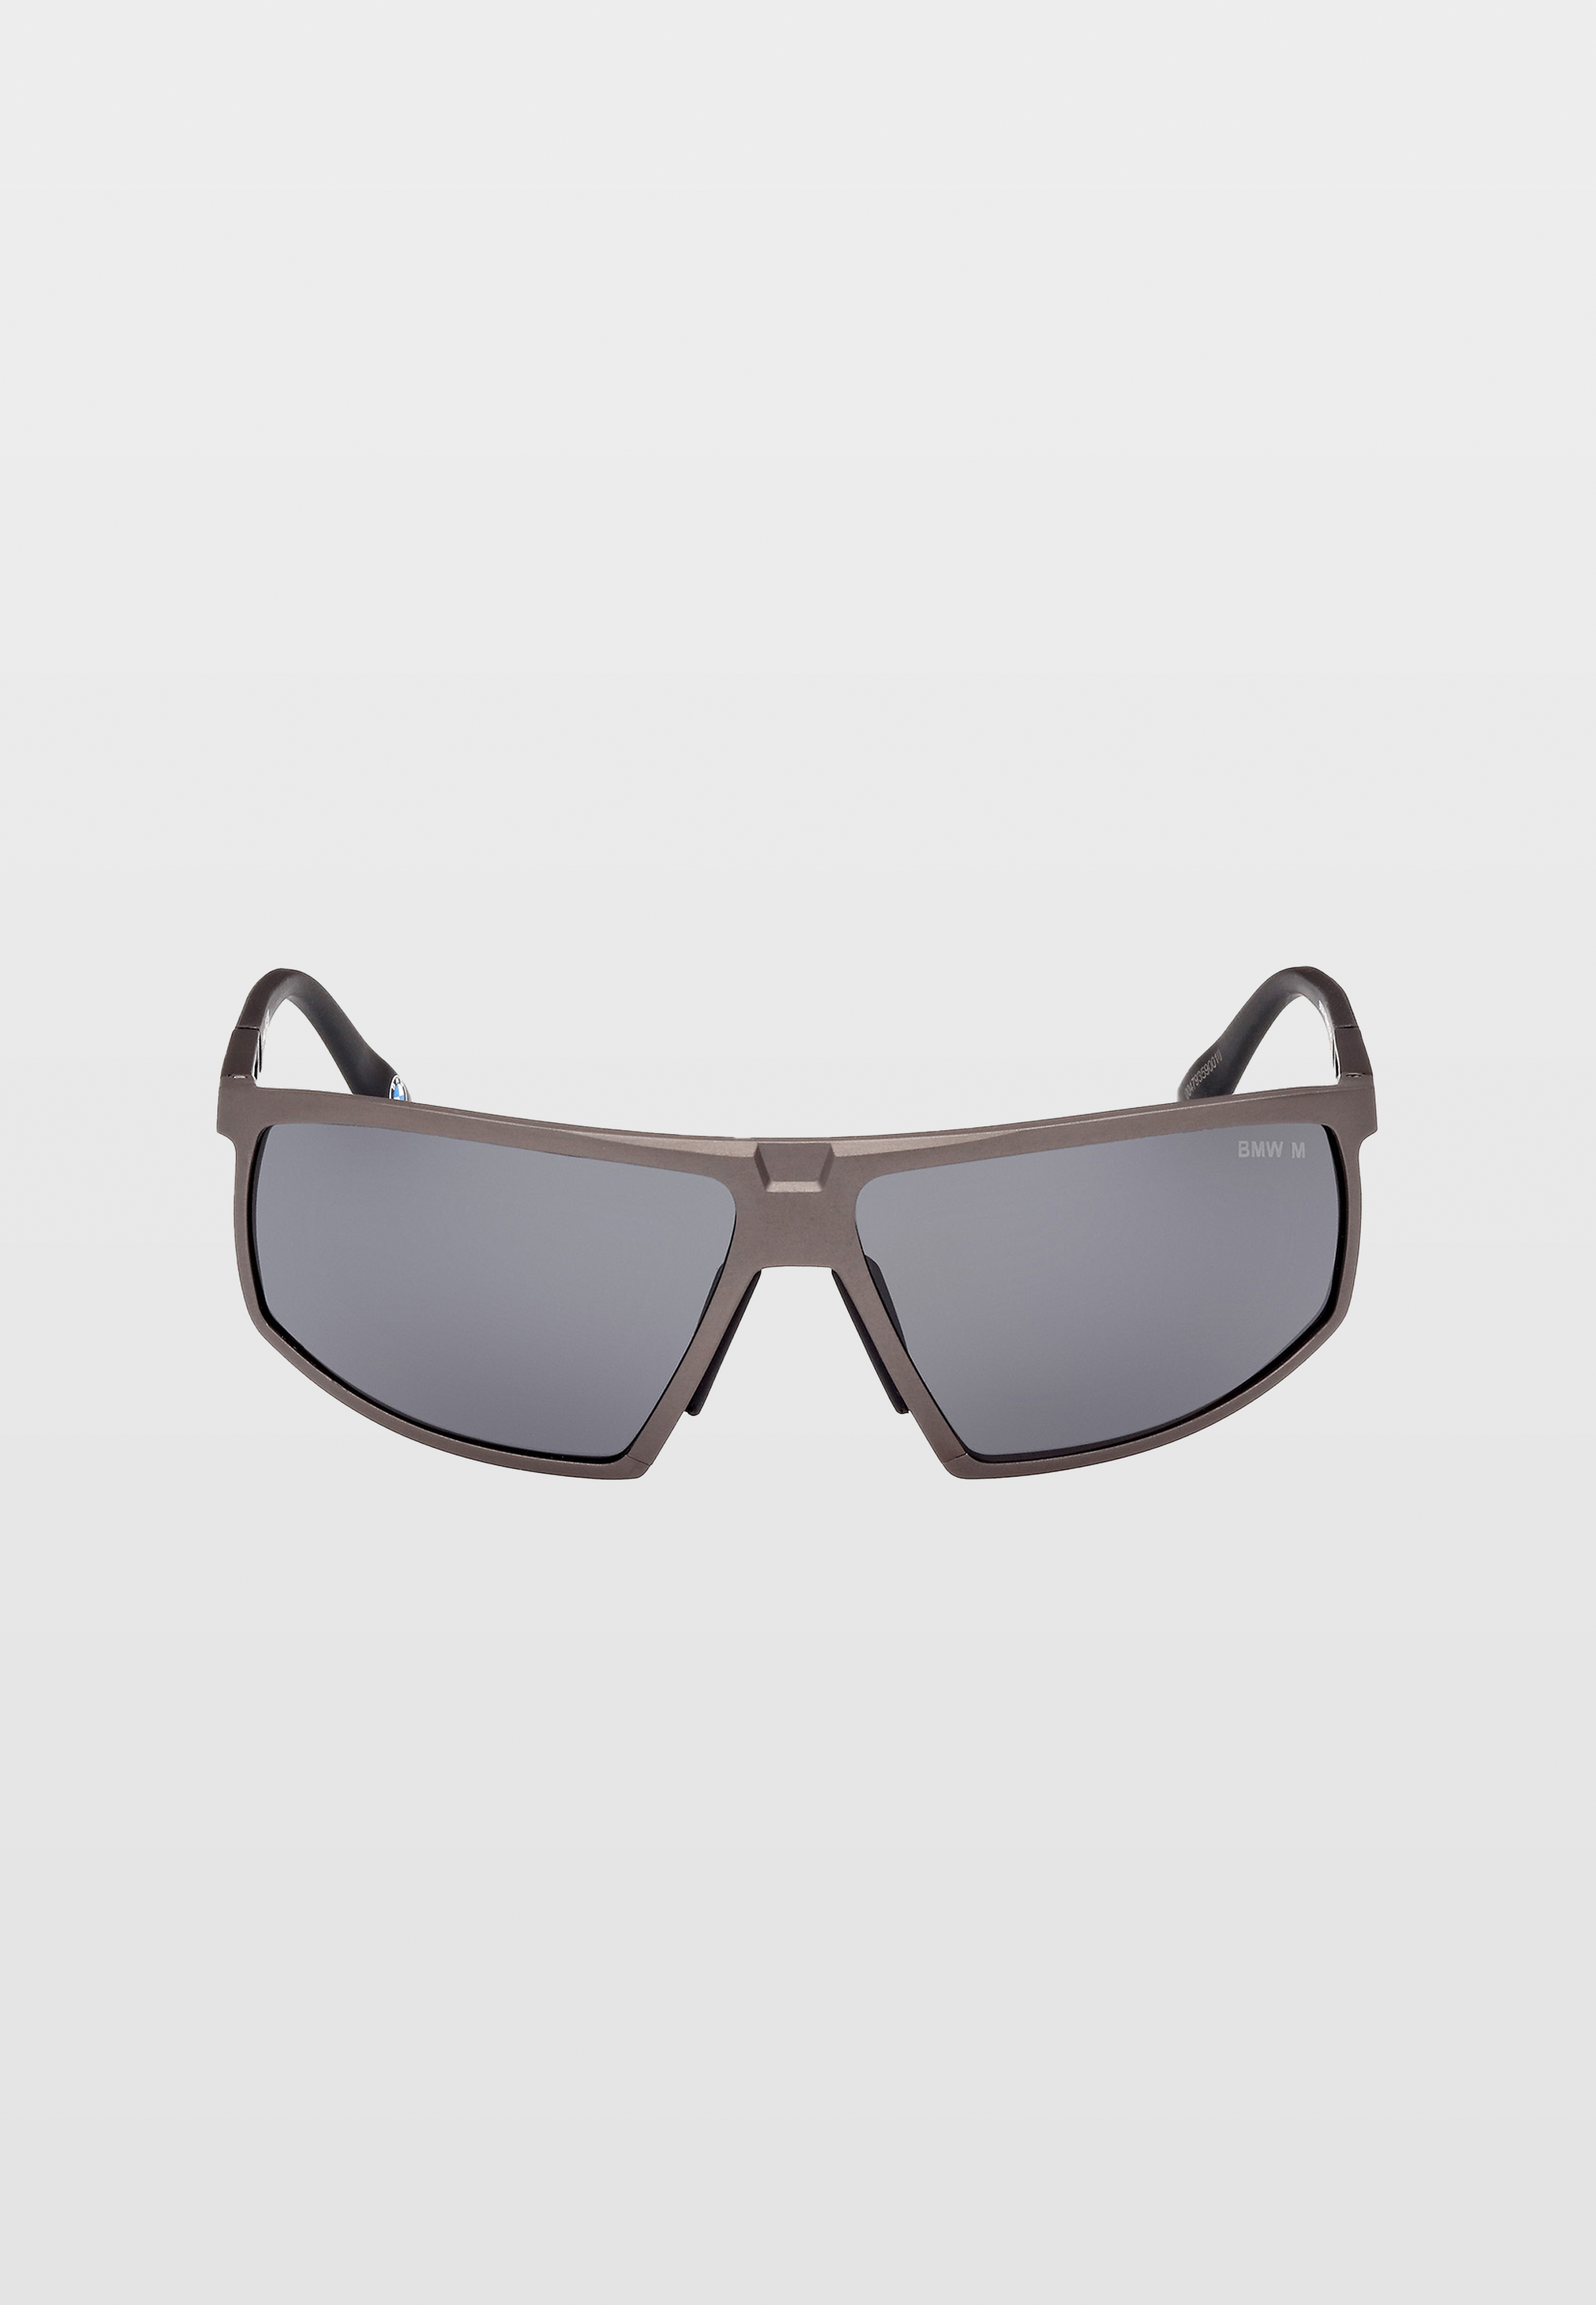 M sunglasses | BMW Lifestyle Store